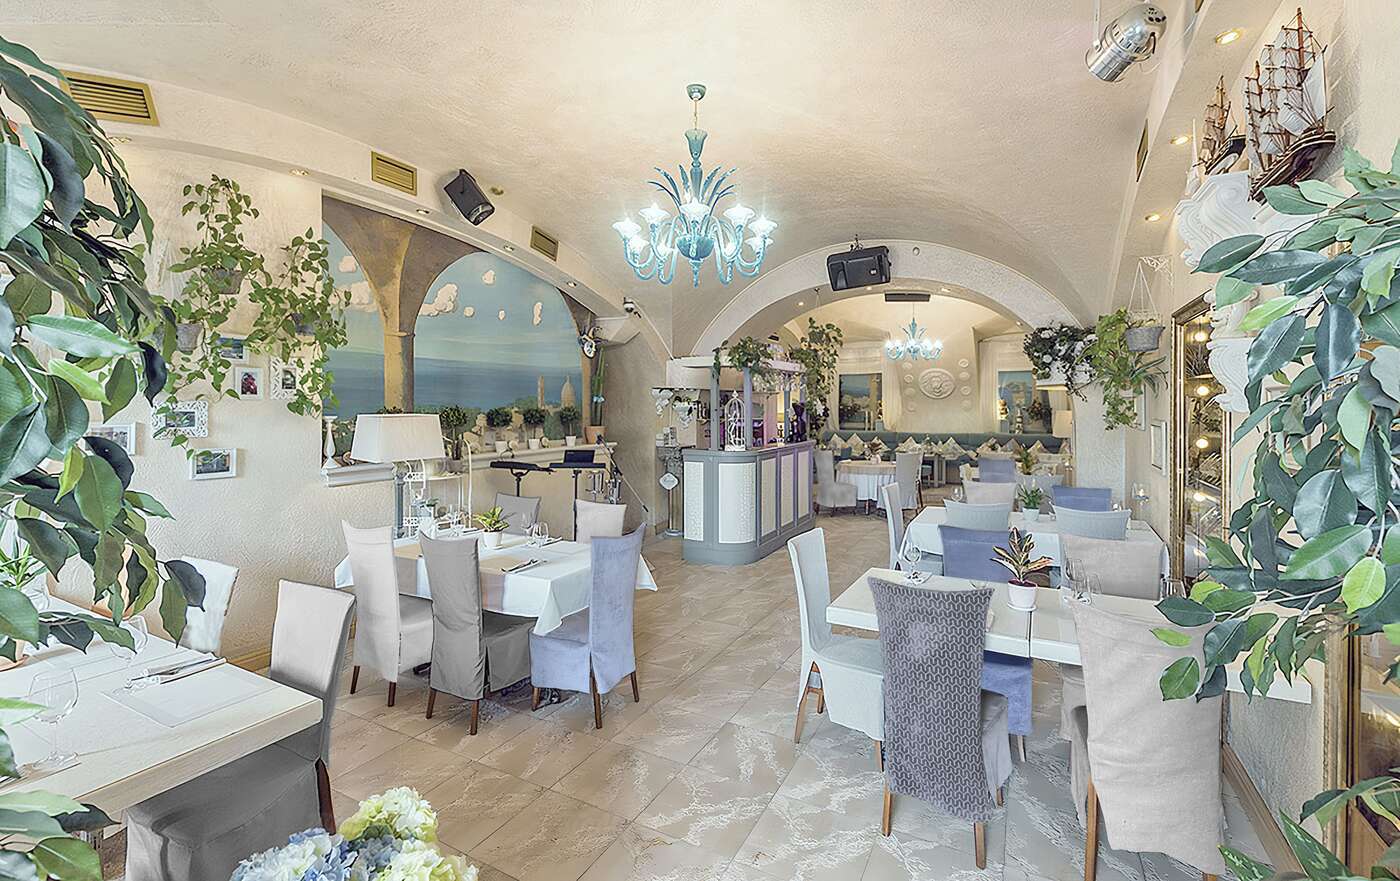 Ресторан Палермо (Palermo) на набережной реки Фонтанки